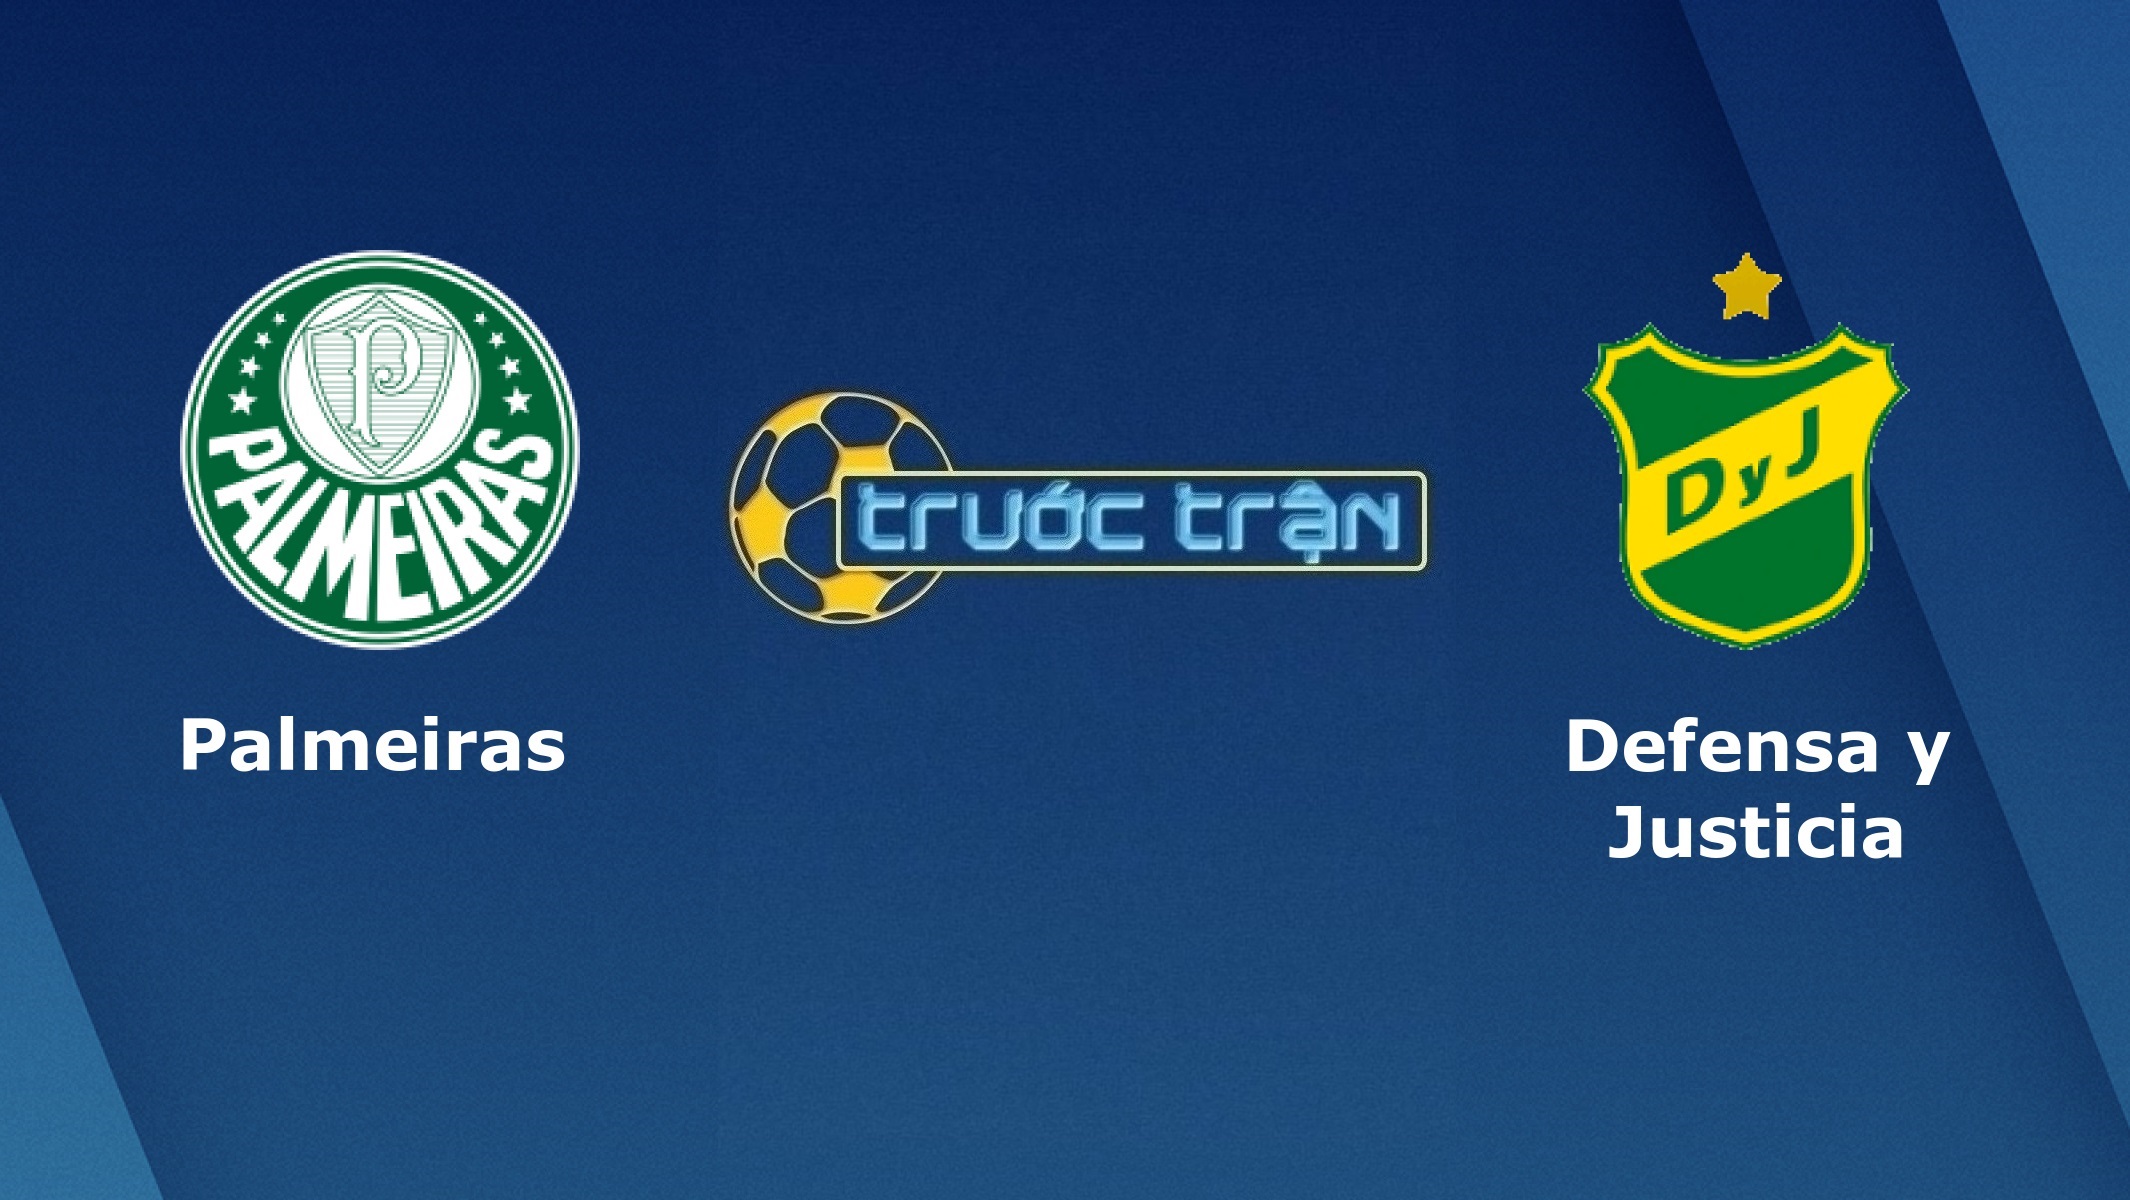 Palmeiras vs Defensa y Justicia – Tip kèo bóng đá hôm nay – 07h30 15/04/2021